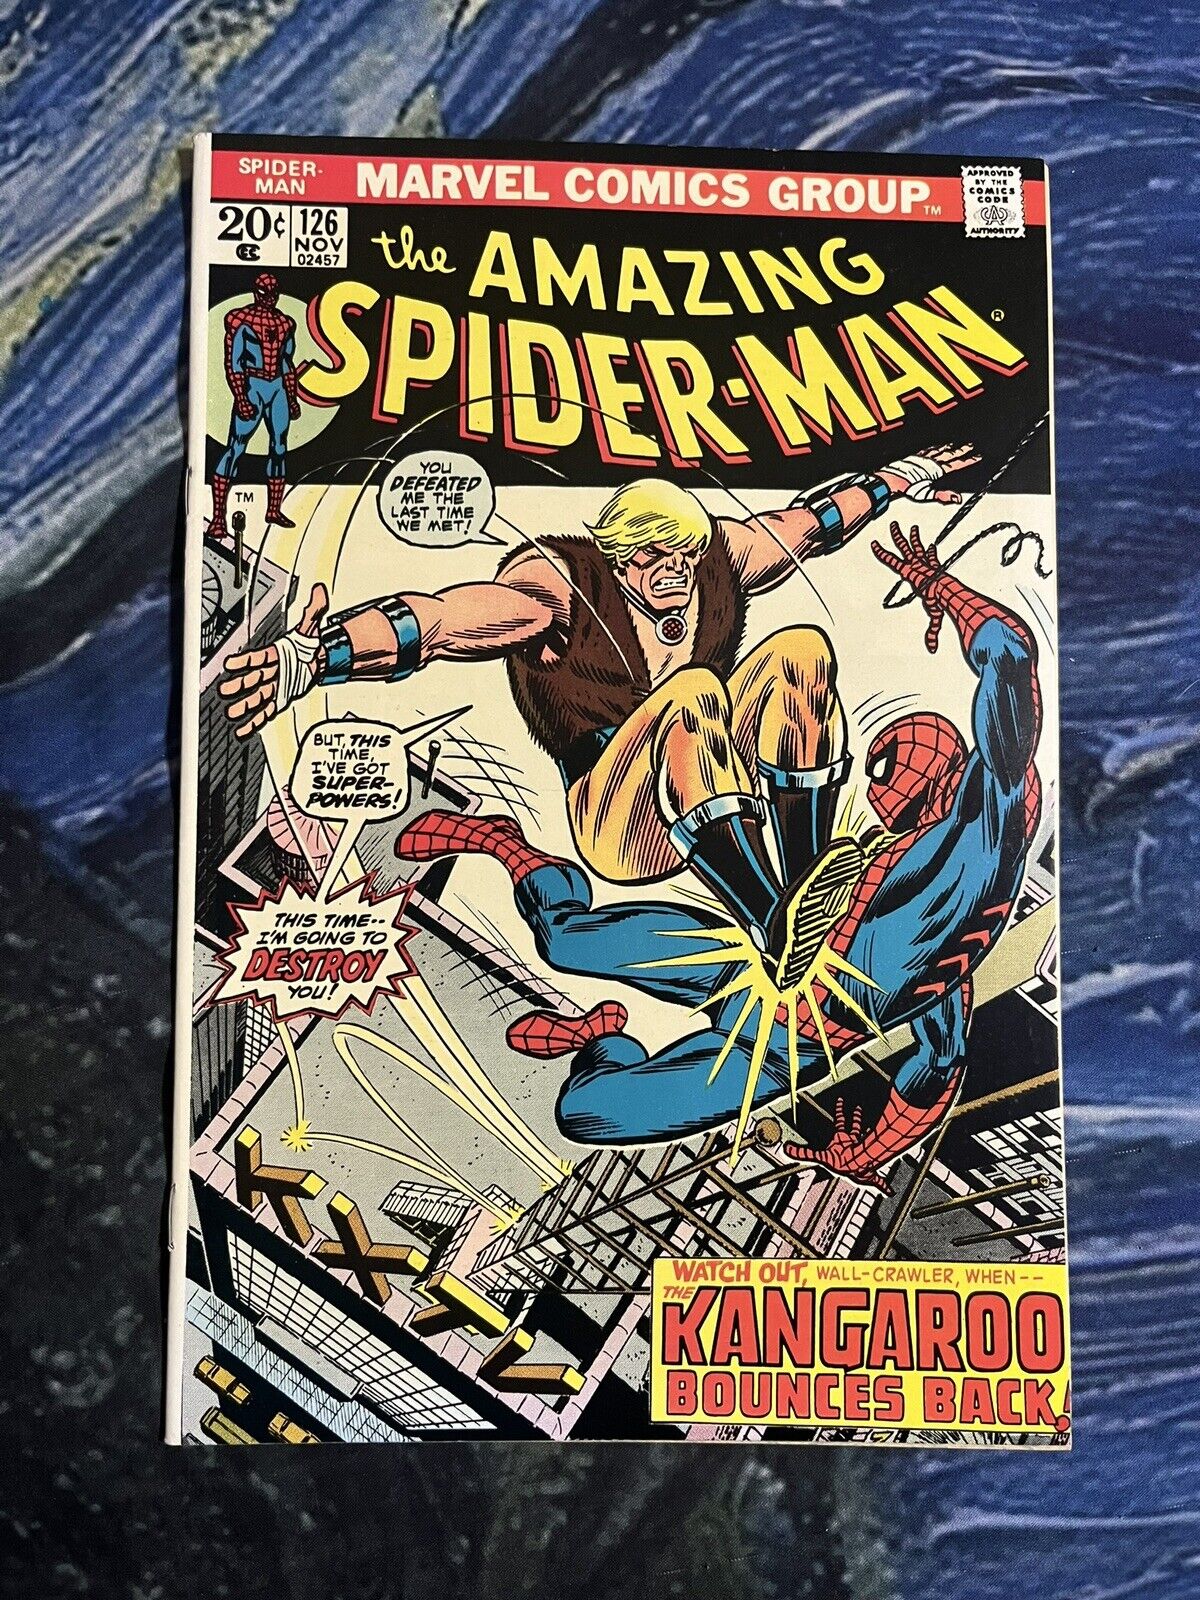 The Amazing Spider-Man #126 (Marvel Comics November 1973)